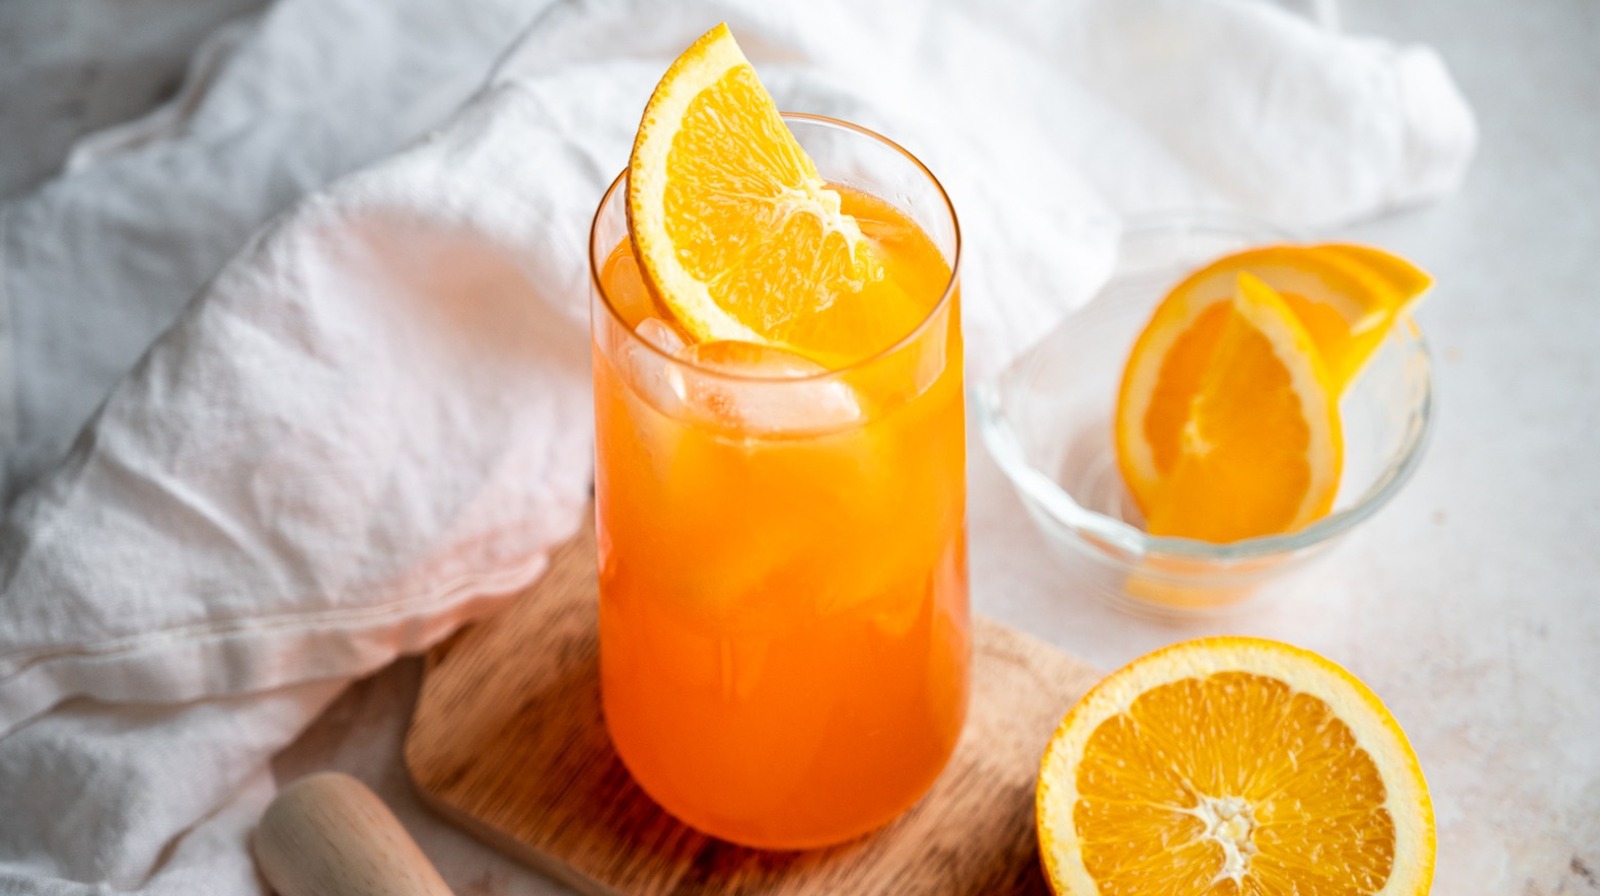 https://www.thedailymeal.com/img/gallery/refreshing-orange-crush-cocktail-recipe/l-intro-1673553877.jpg